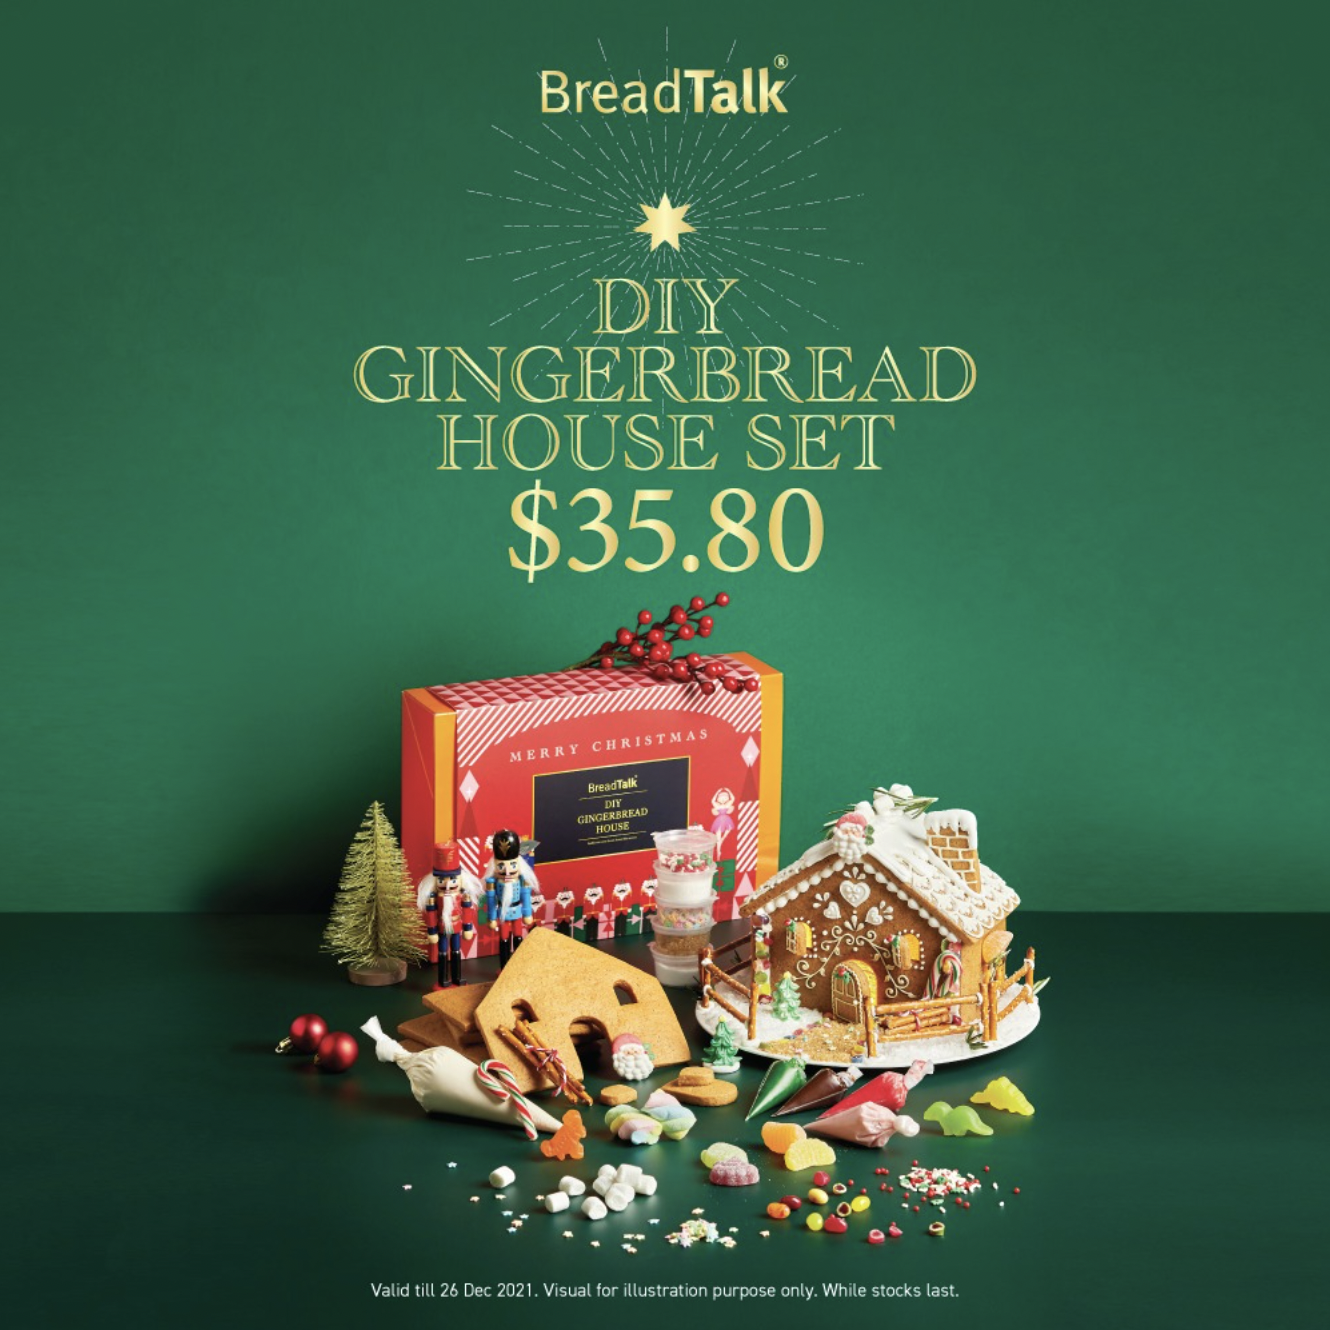 Promotional poster for Breadtalk's Gingerbread Hosue